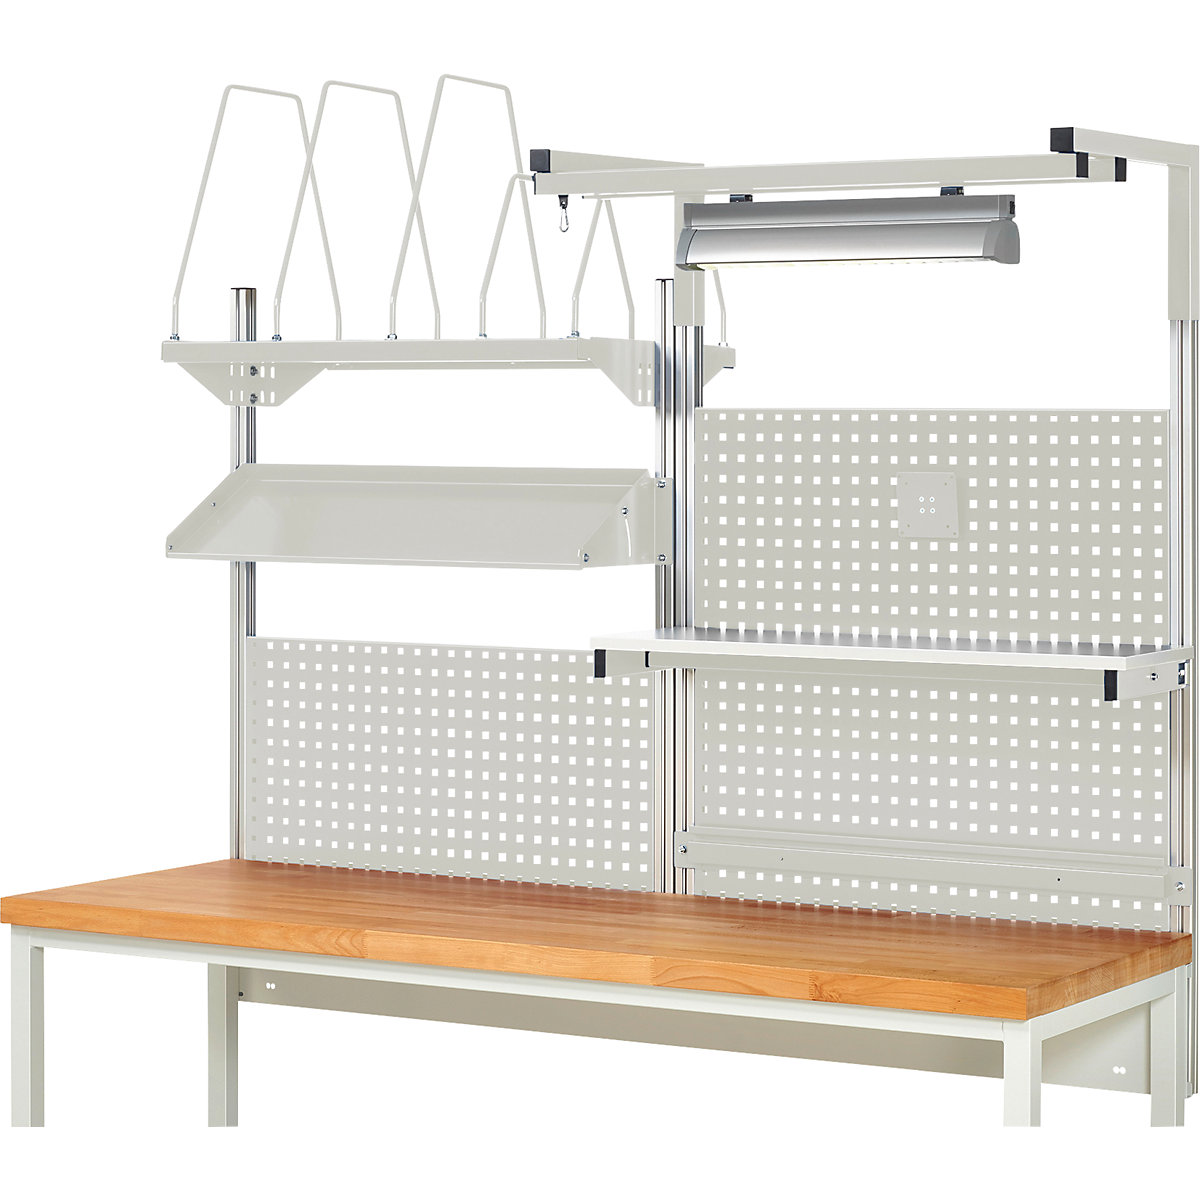 Complete modular system set 6 – RAU, for workbench, width 2000 mm